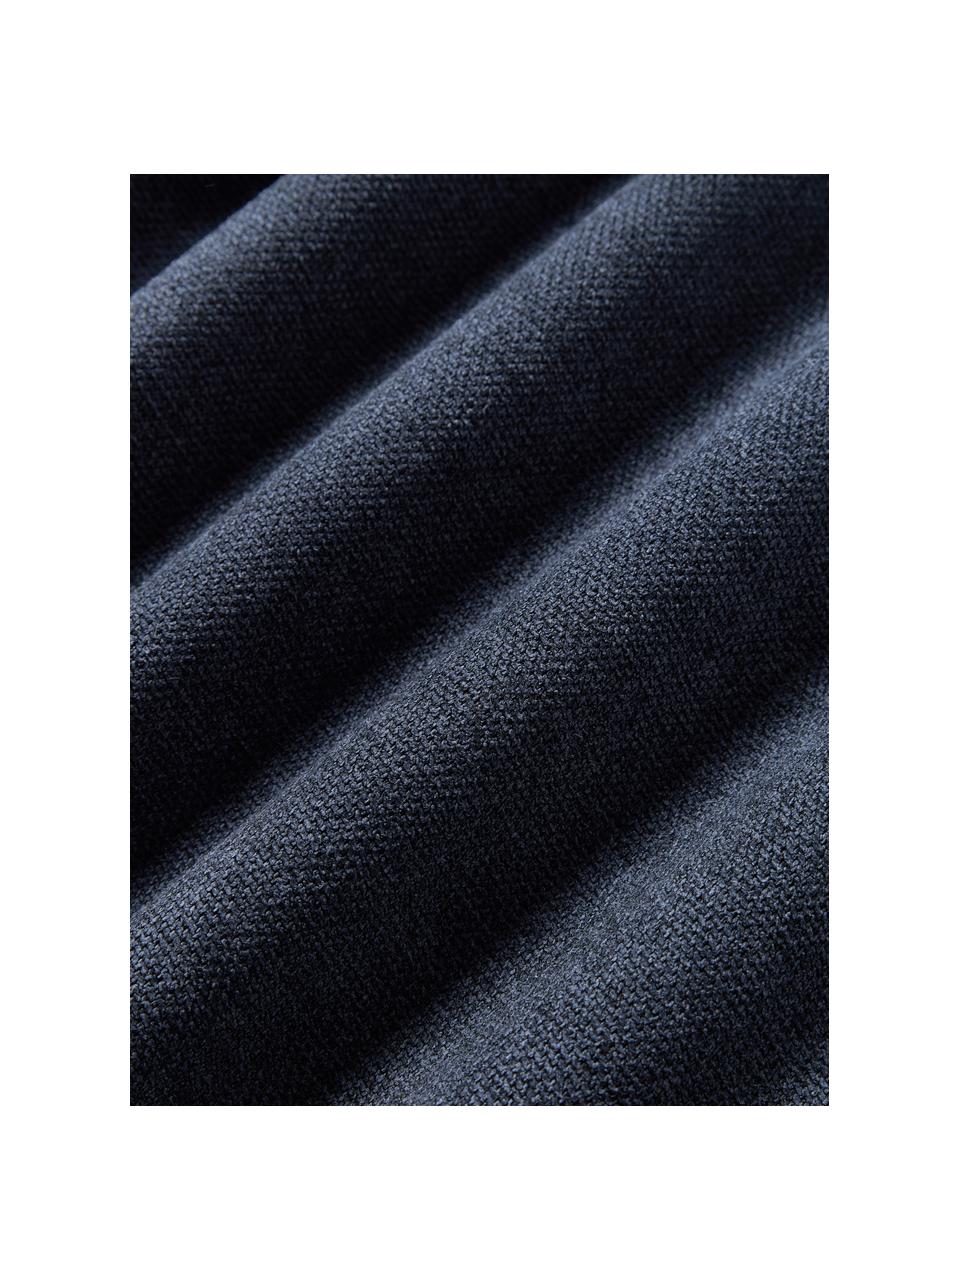 Sofa-Kissen Lennon, Hülle: 100 % Polyester, Webstoff Dunkelblau, B 70 x L 70 cm